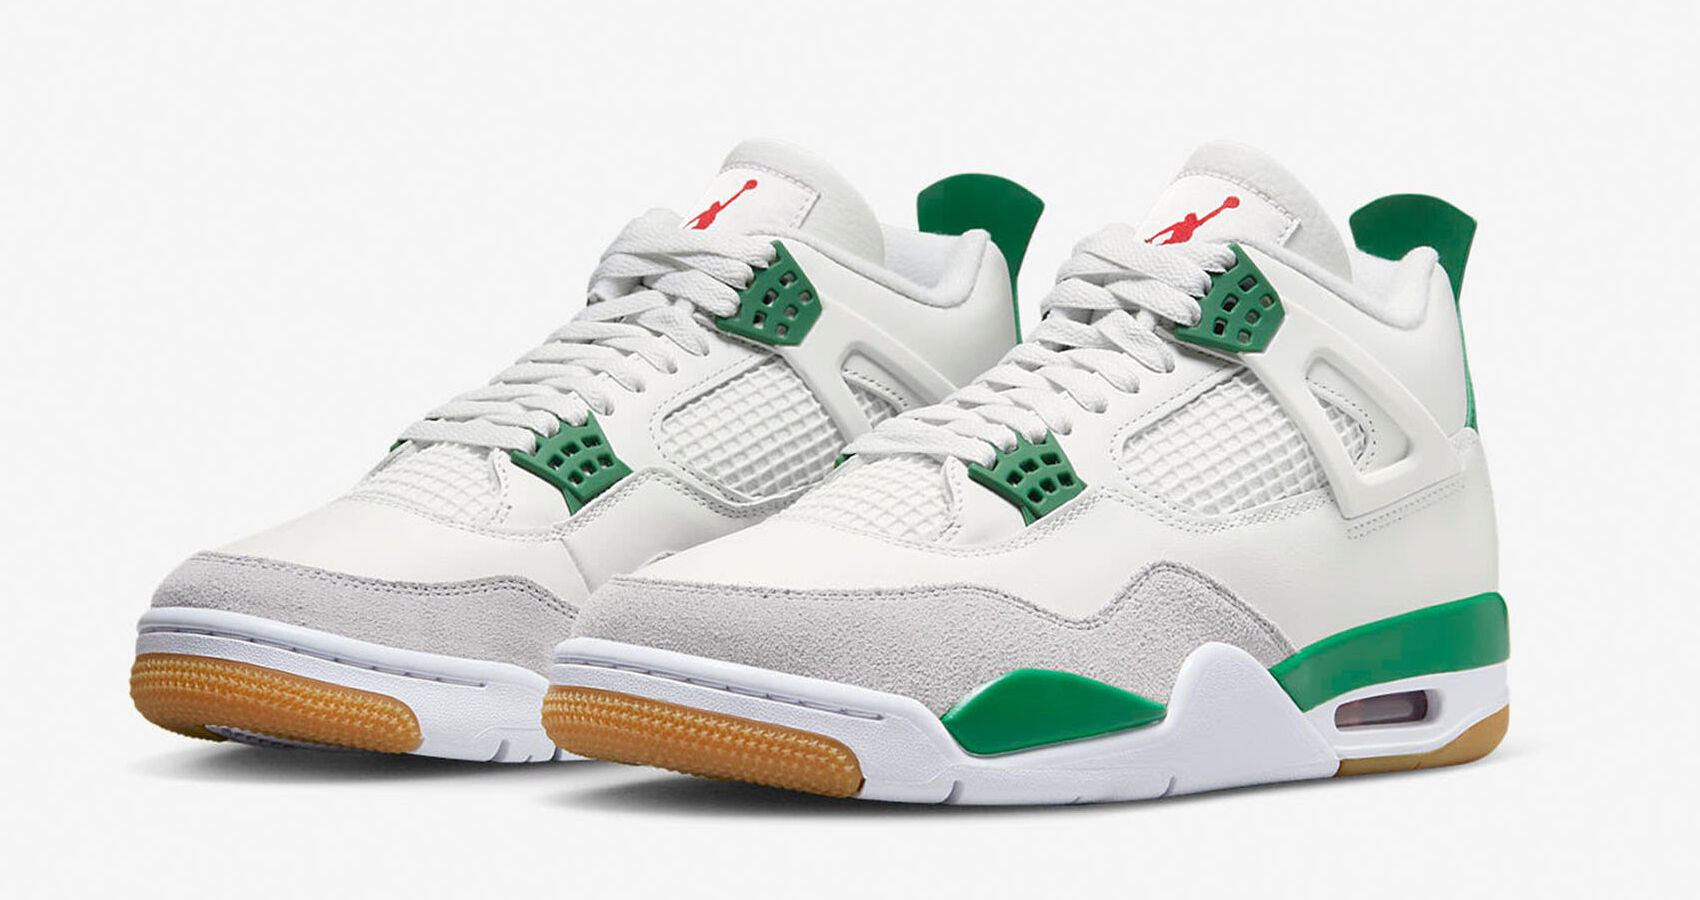 The Nike SB x Air Jordan 4 Pine Green Drops Soon